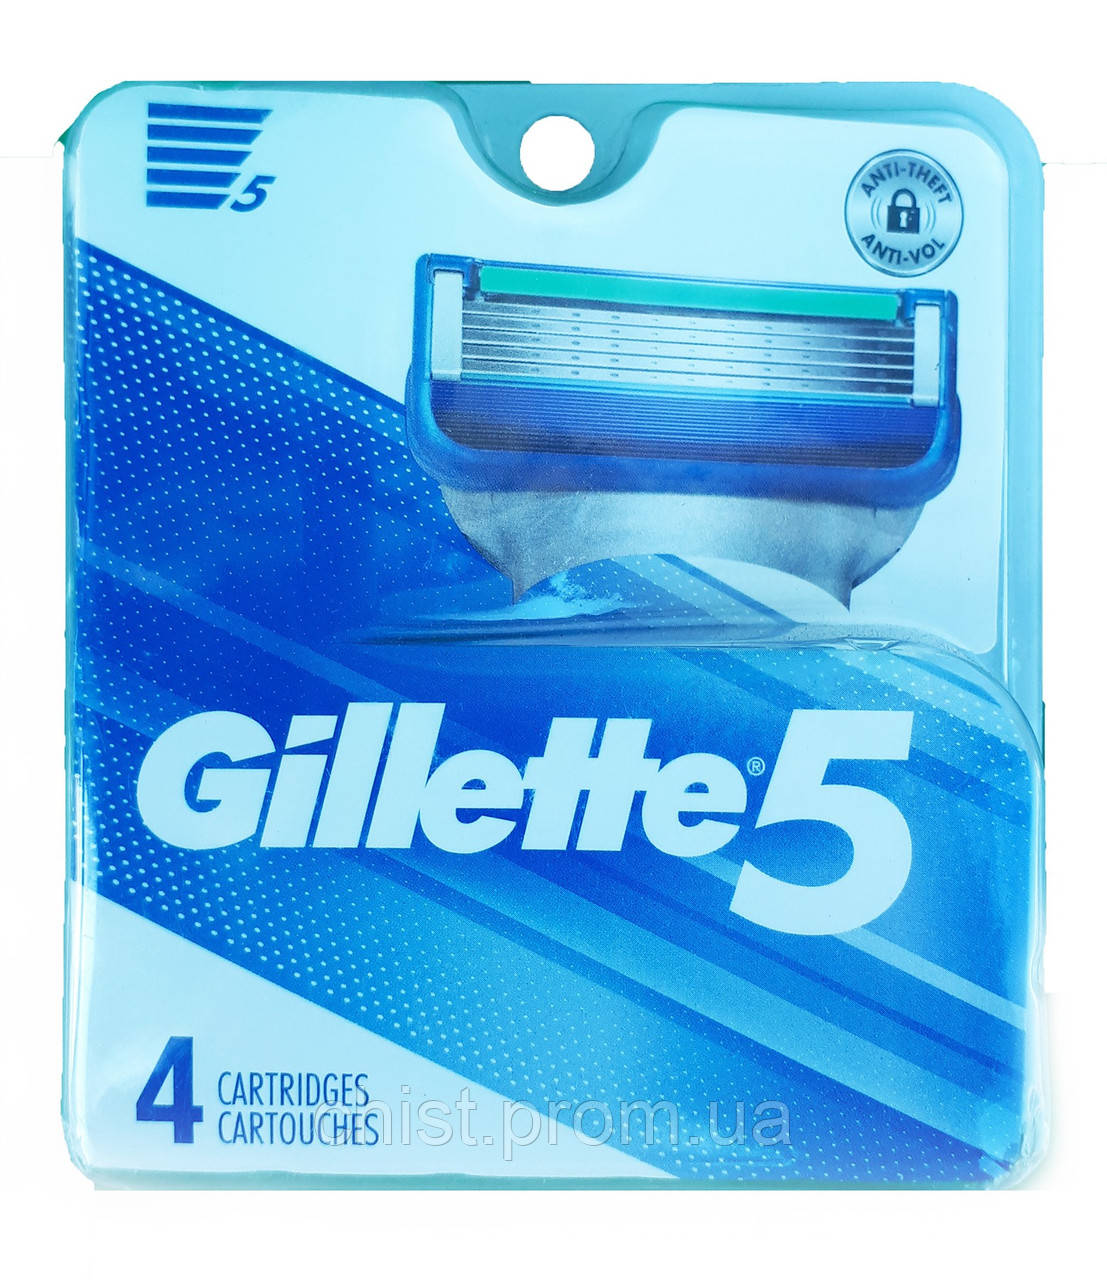 Gillette 5 сменные кассеты (4 шт) USA